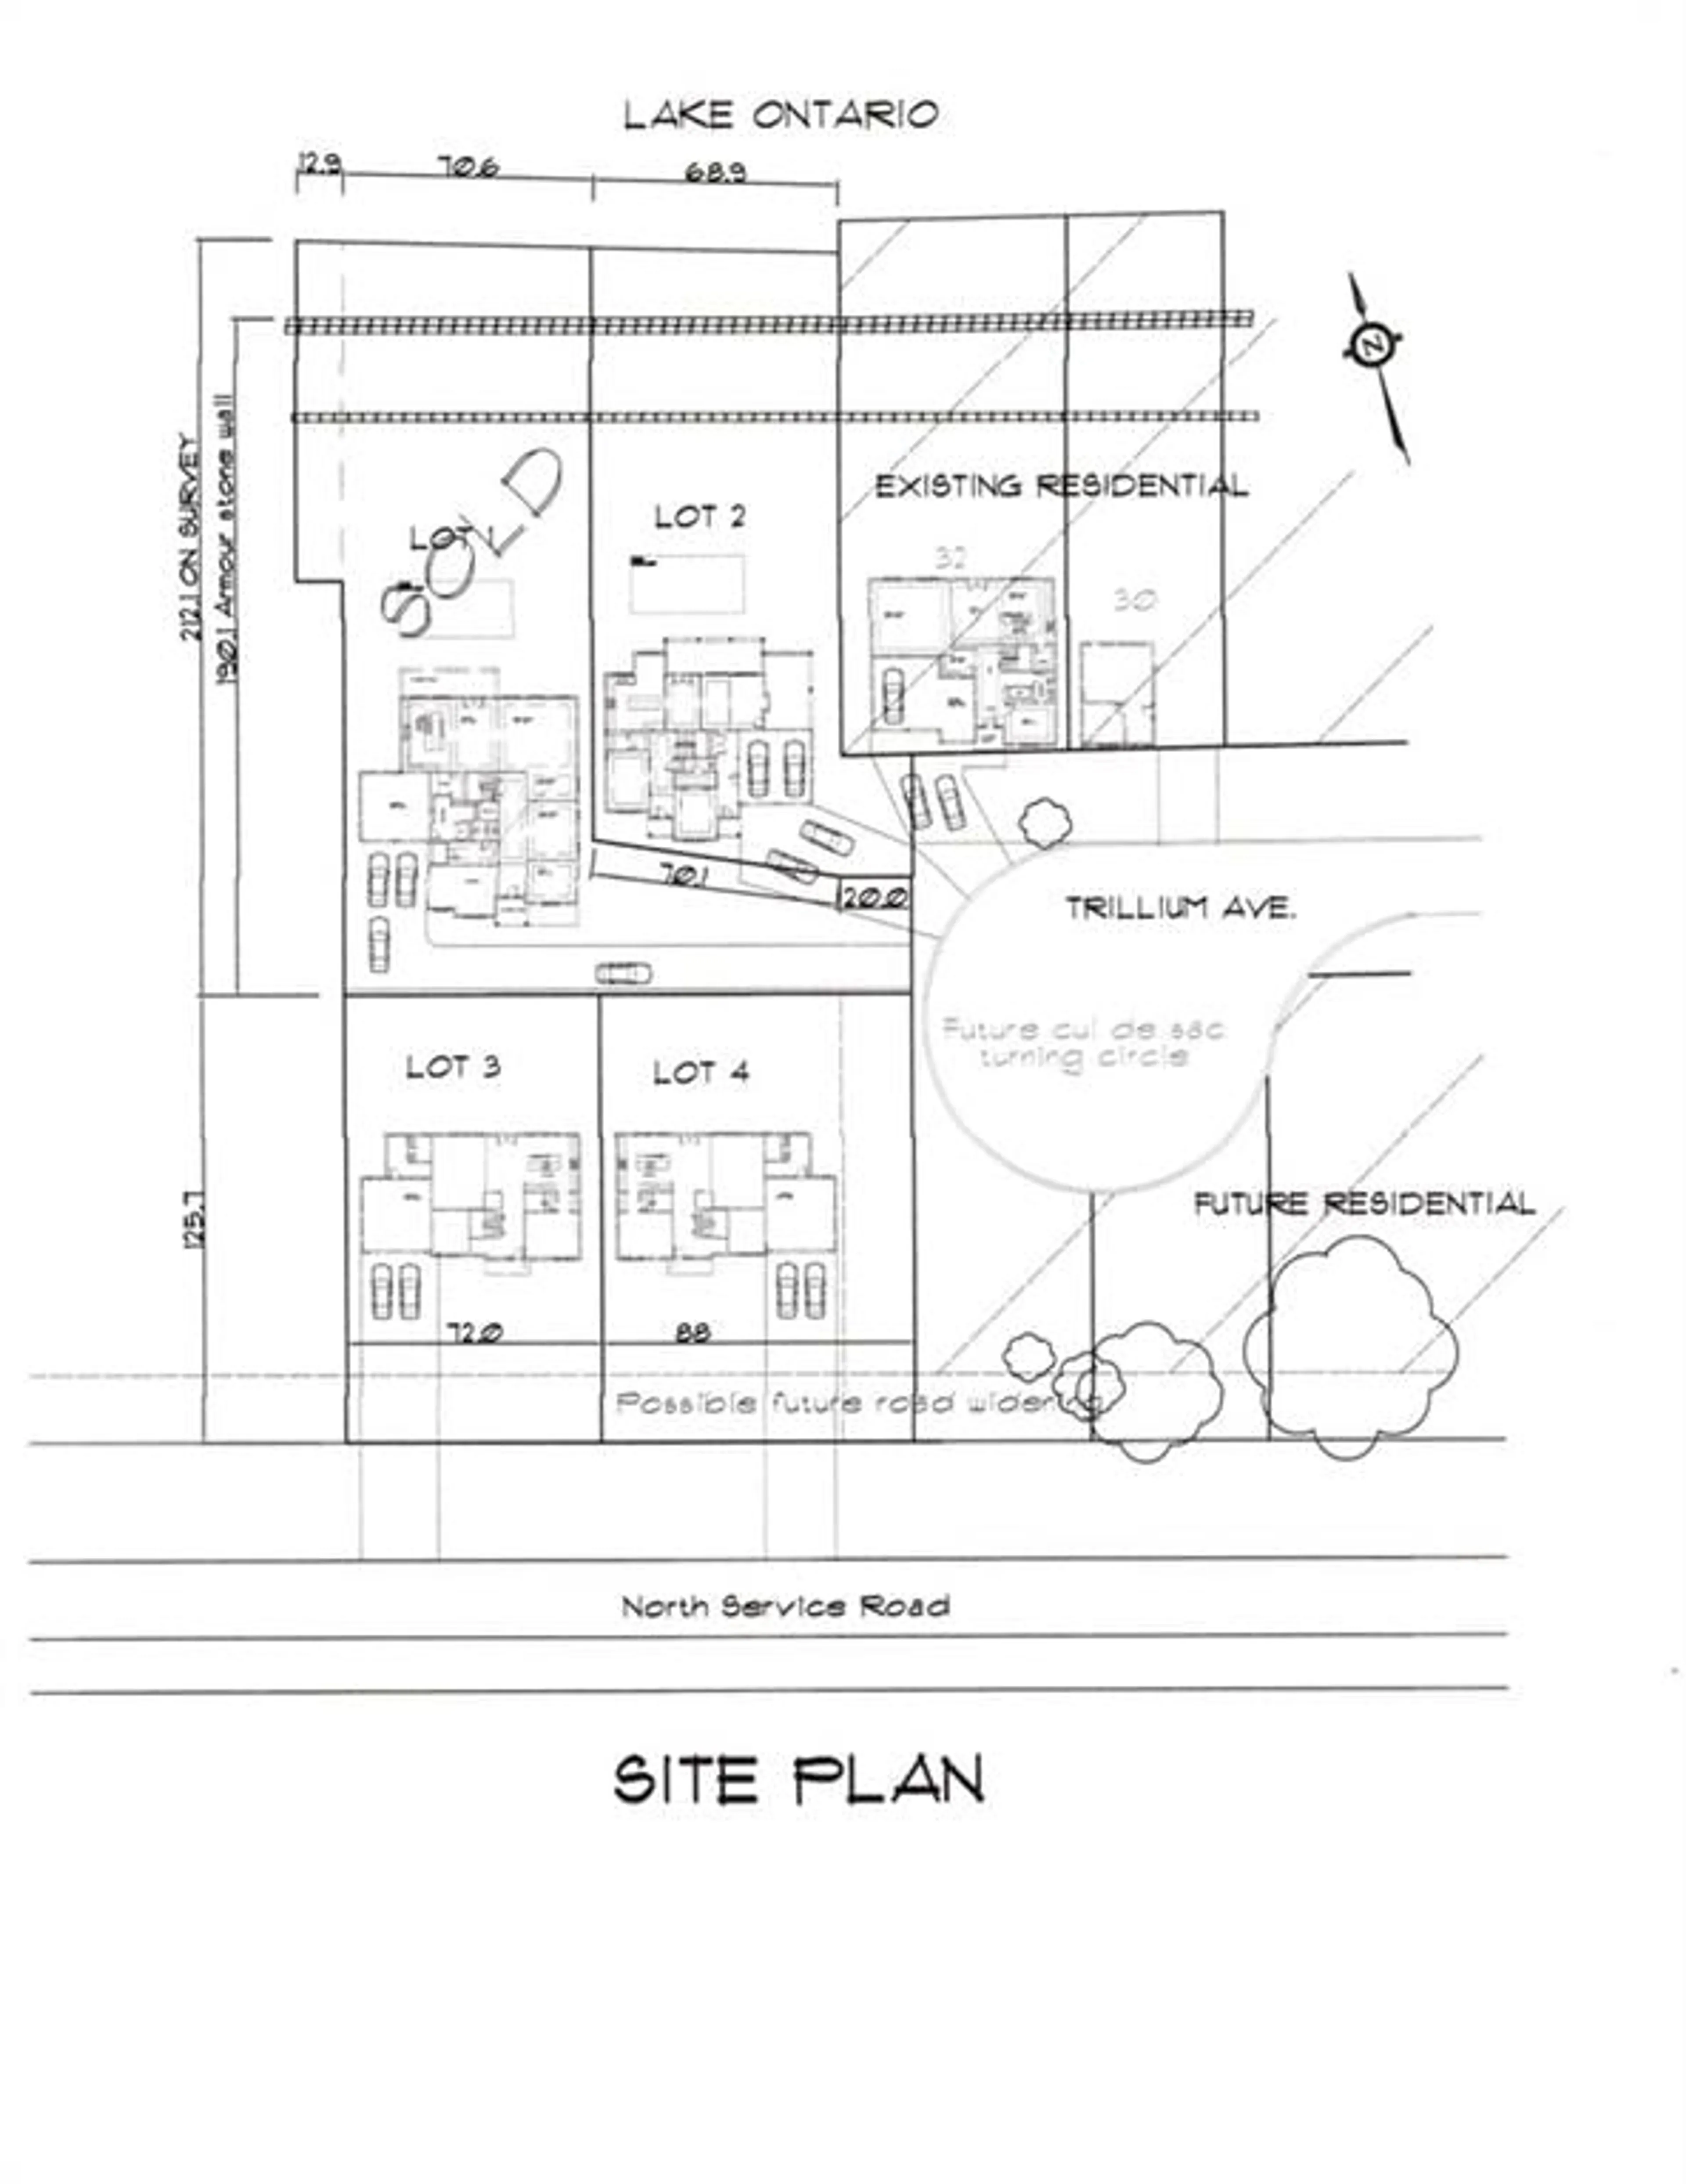 Floor plan for 1097 North Service Rd, Stoney Creek Ontario L8E 5E1